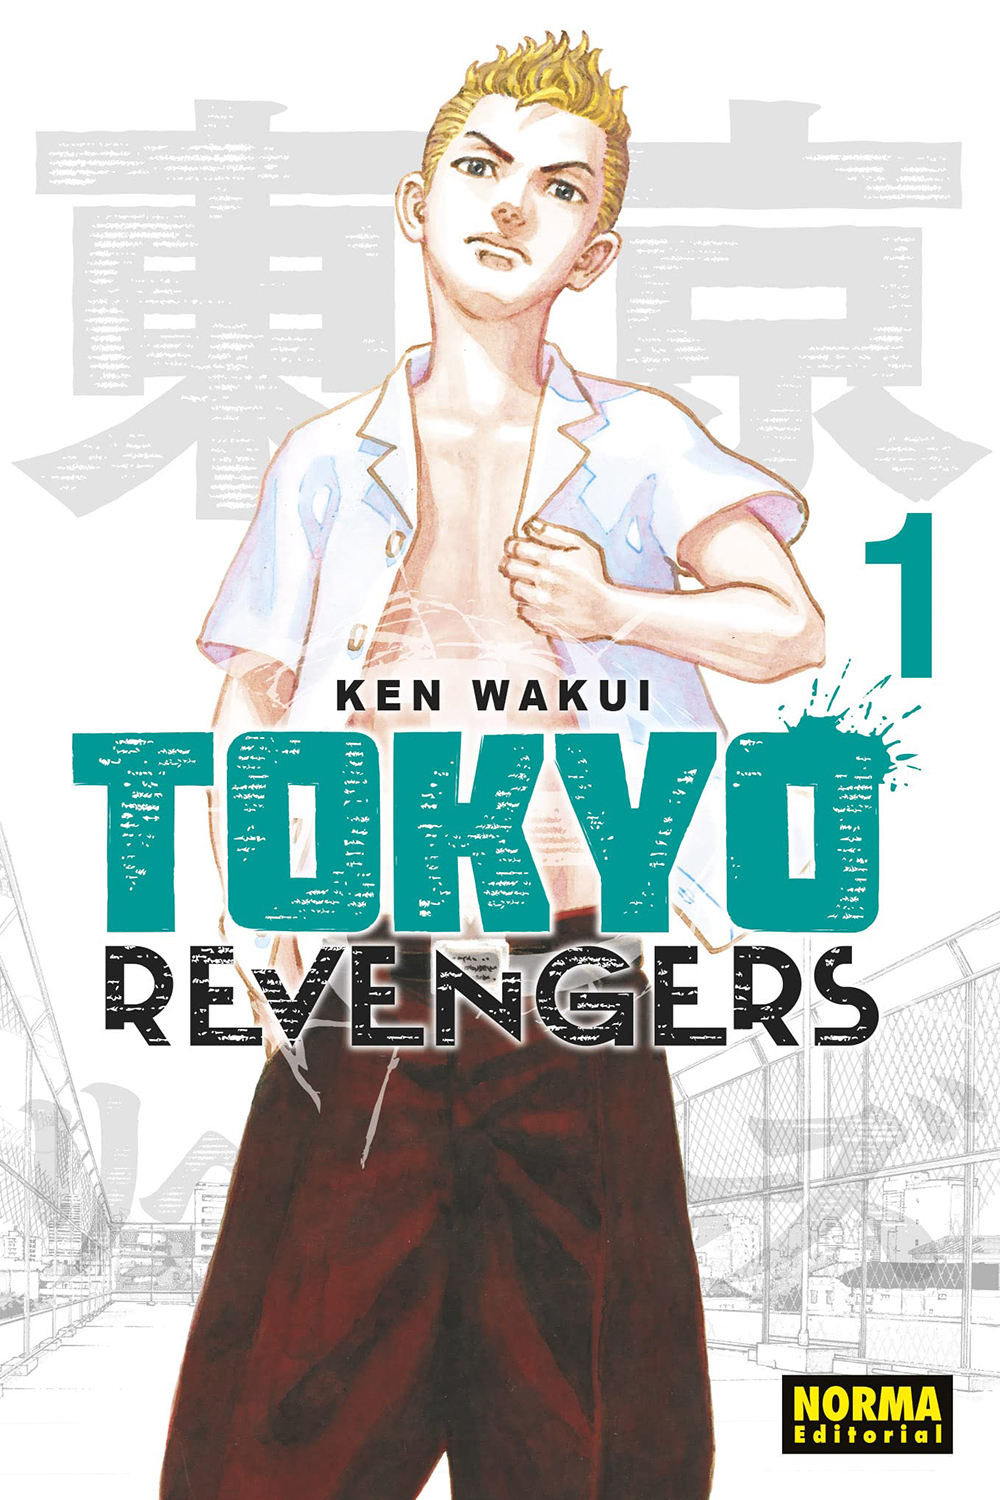 Tokyo Revengers Review  Primera Temporada Reseña en Español in